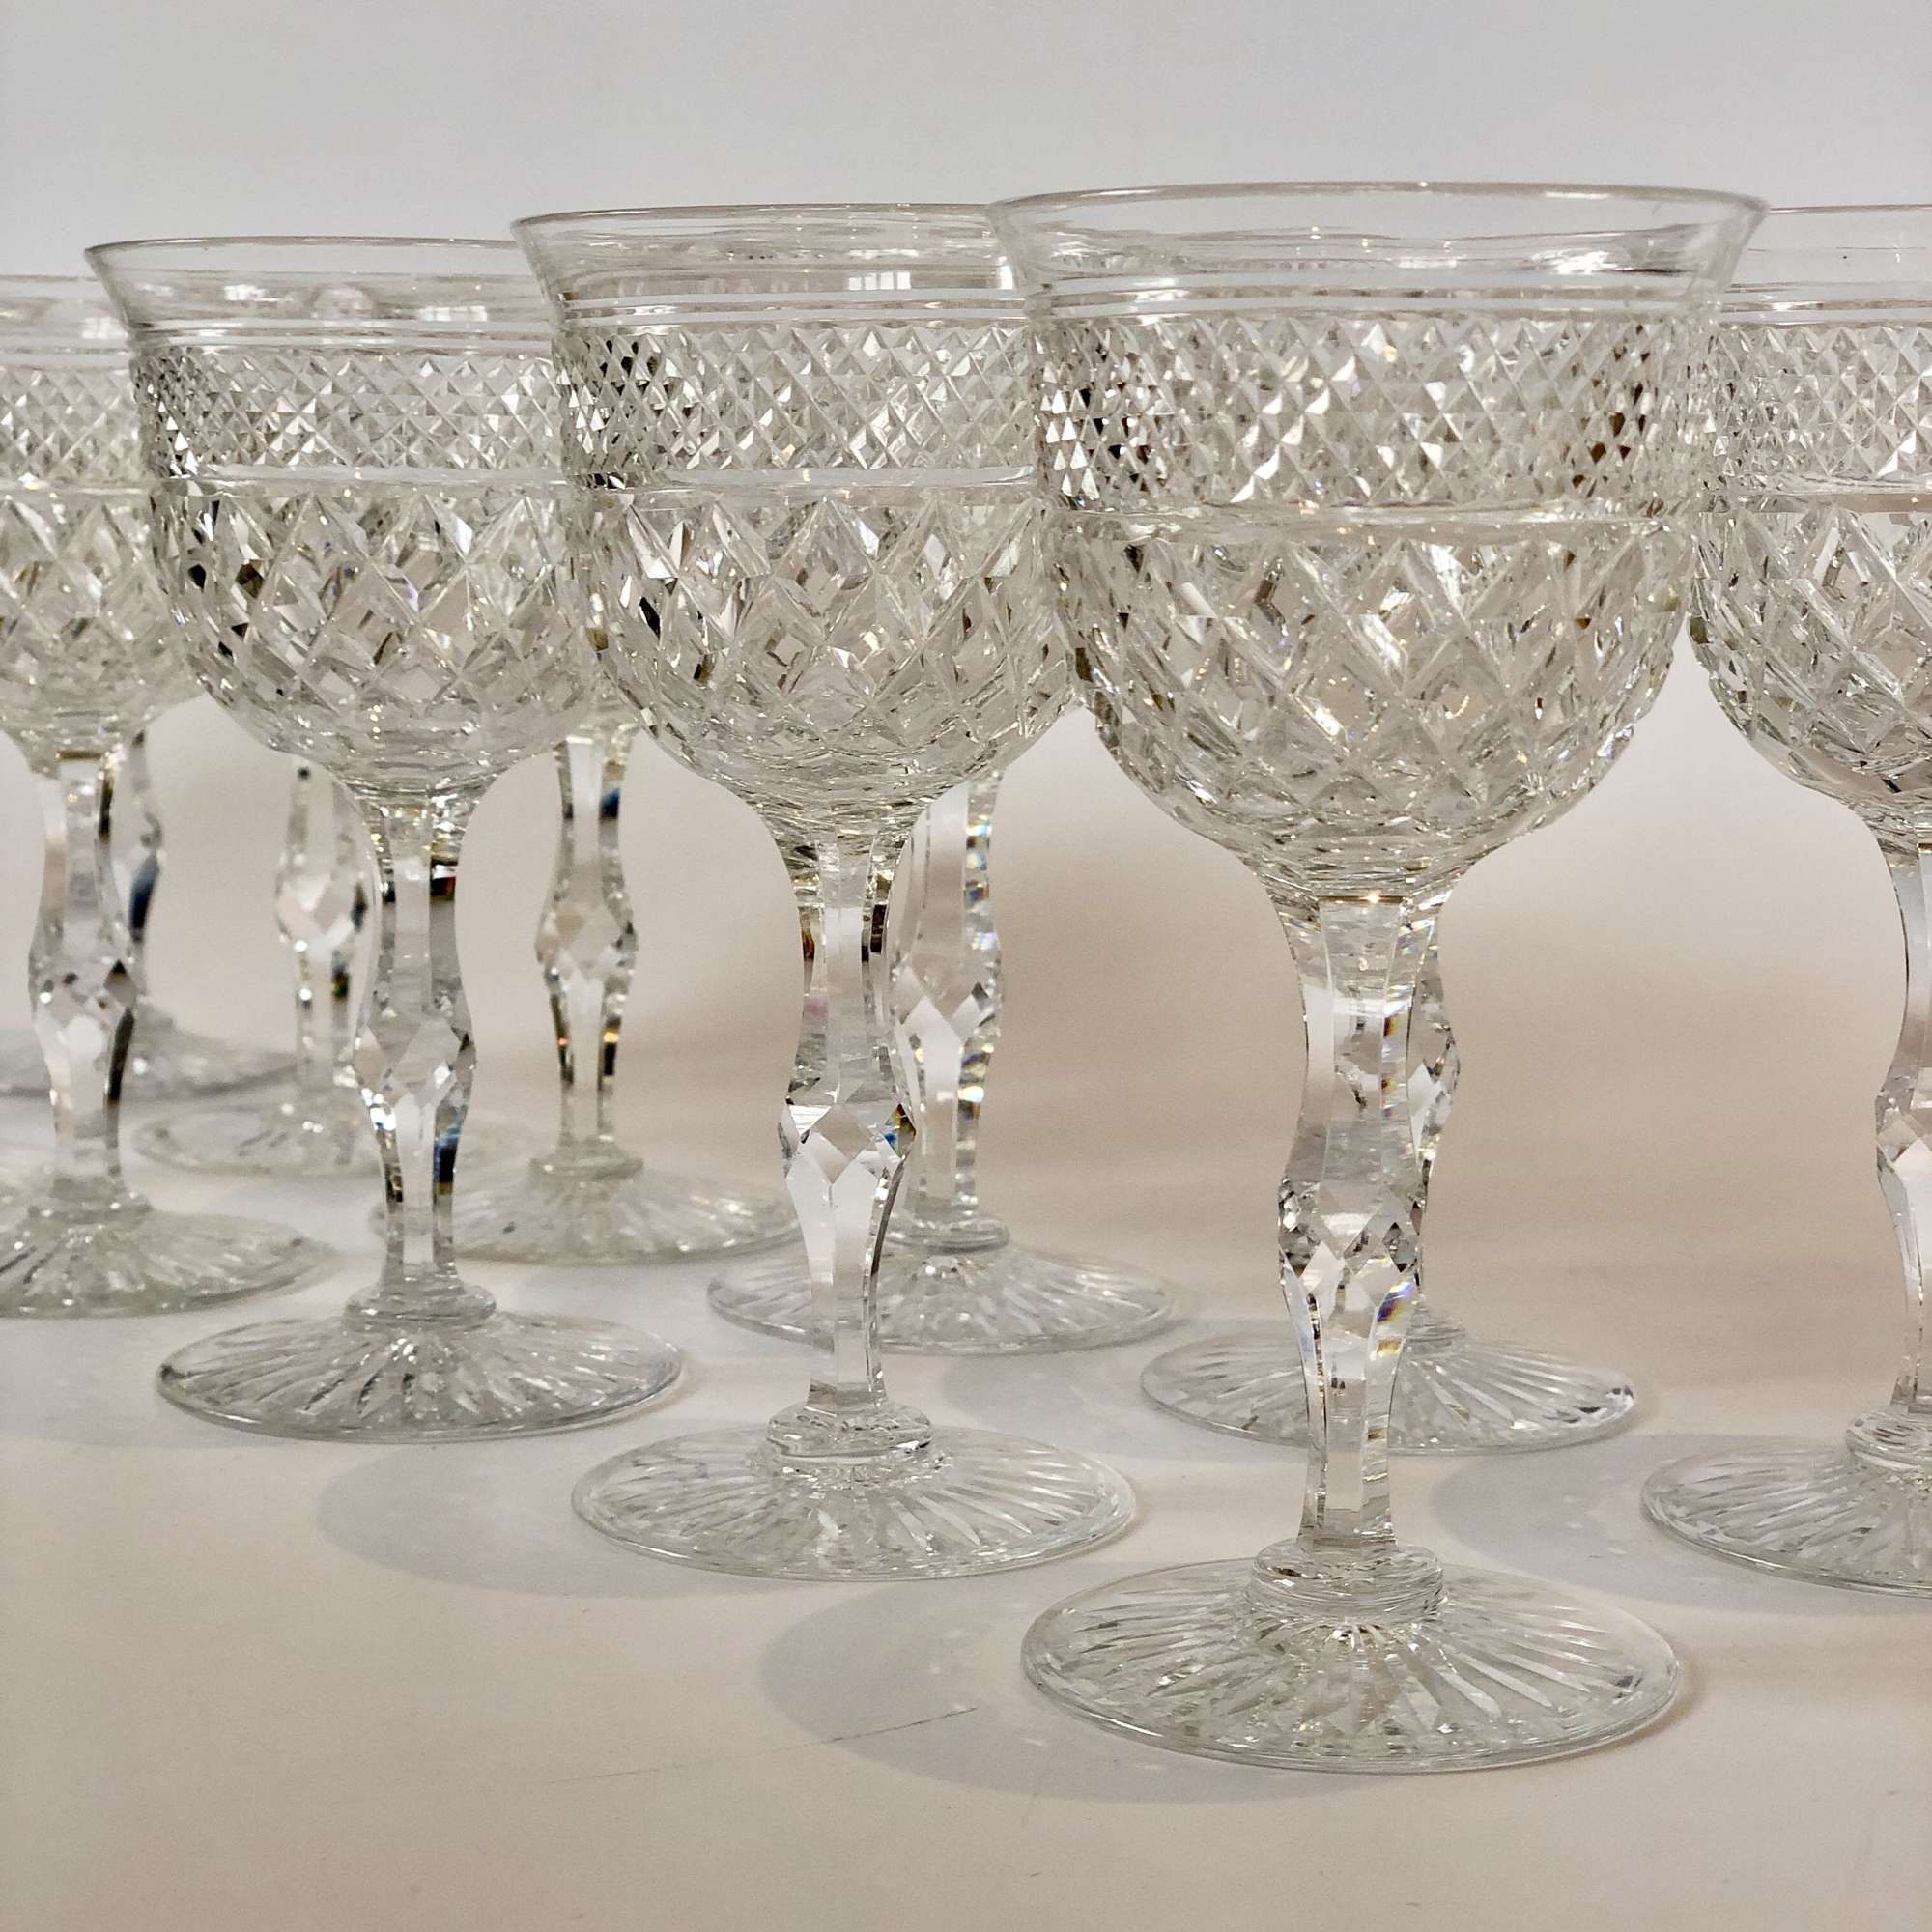 A dozen English crystal wine glasses Circa 1930s by Thomas Webb